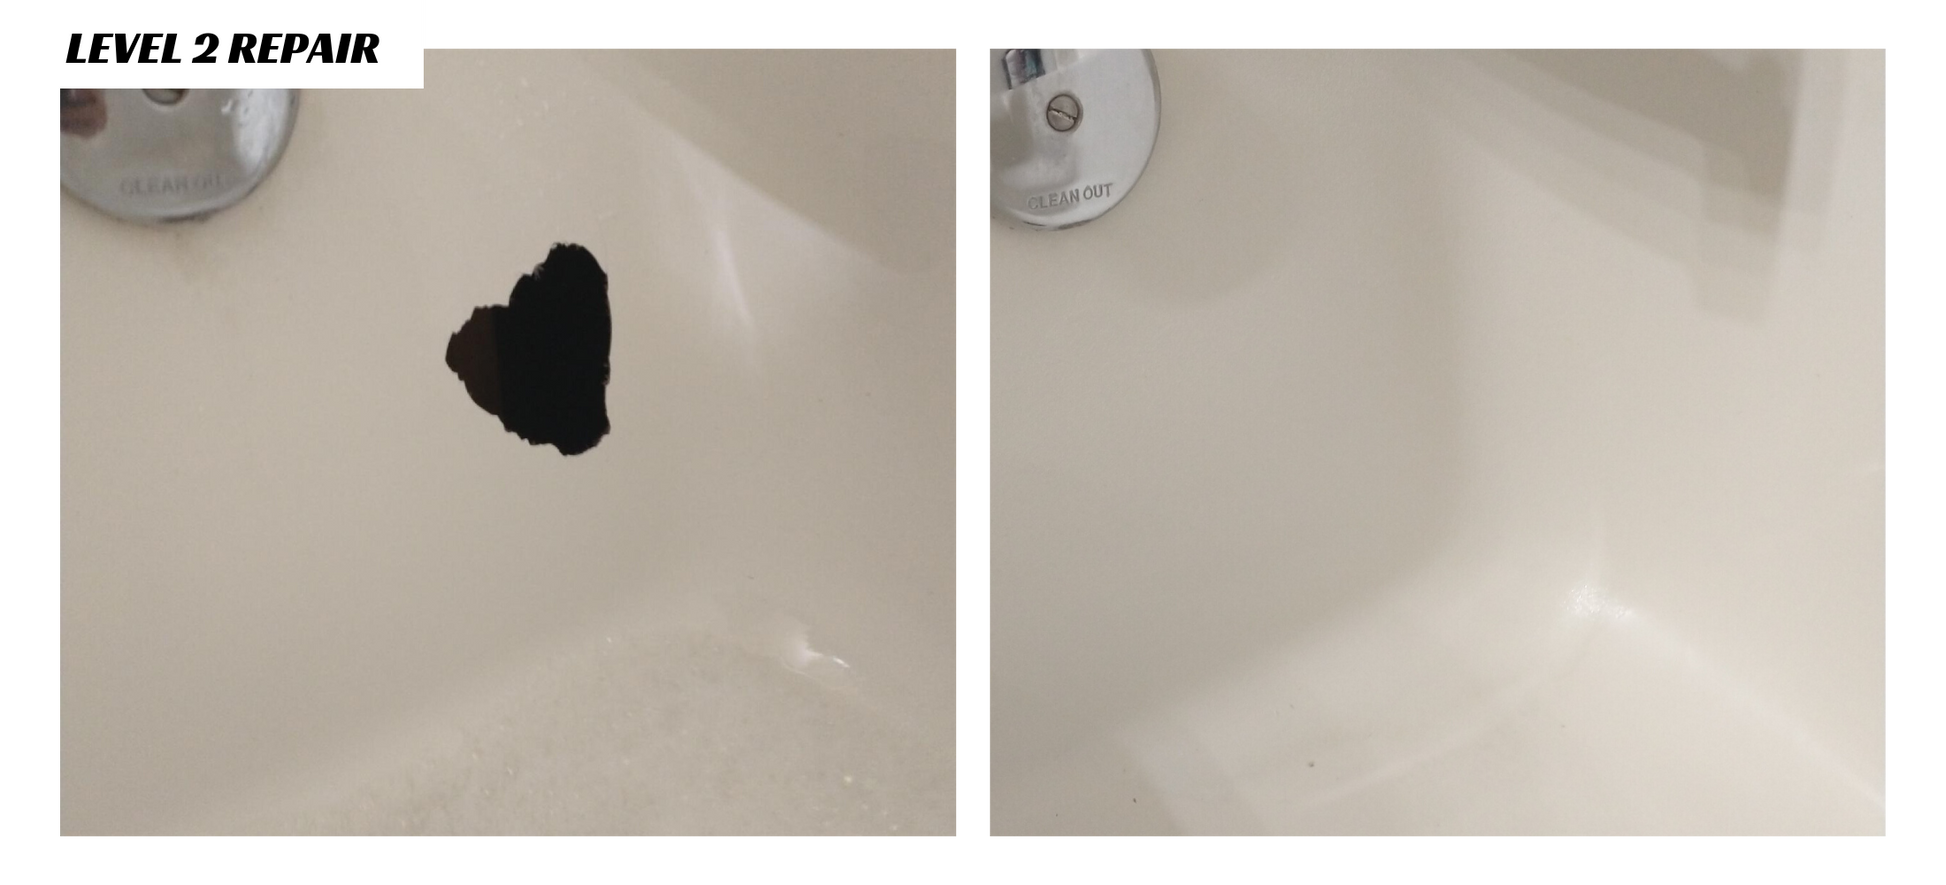 #1 Tub Repair Kit: Large Damage Repair for Acrylic, Fiberglass, and Porcelain Bathtubs and Showers